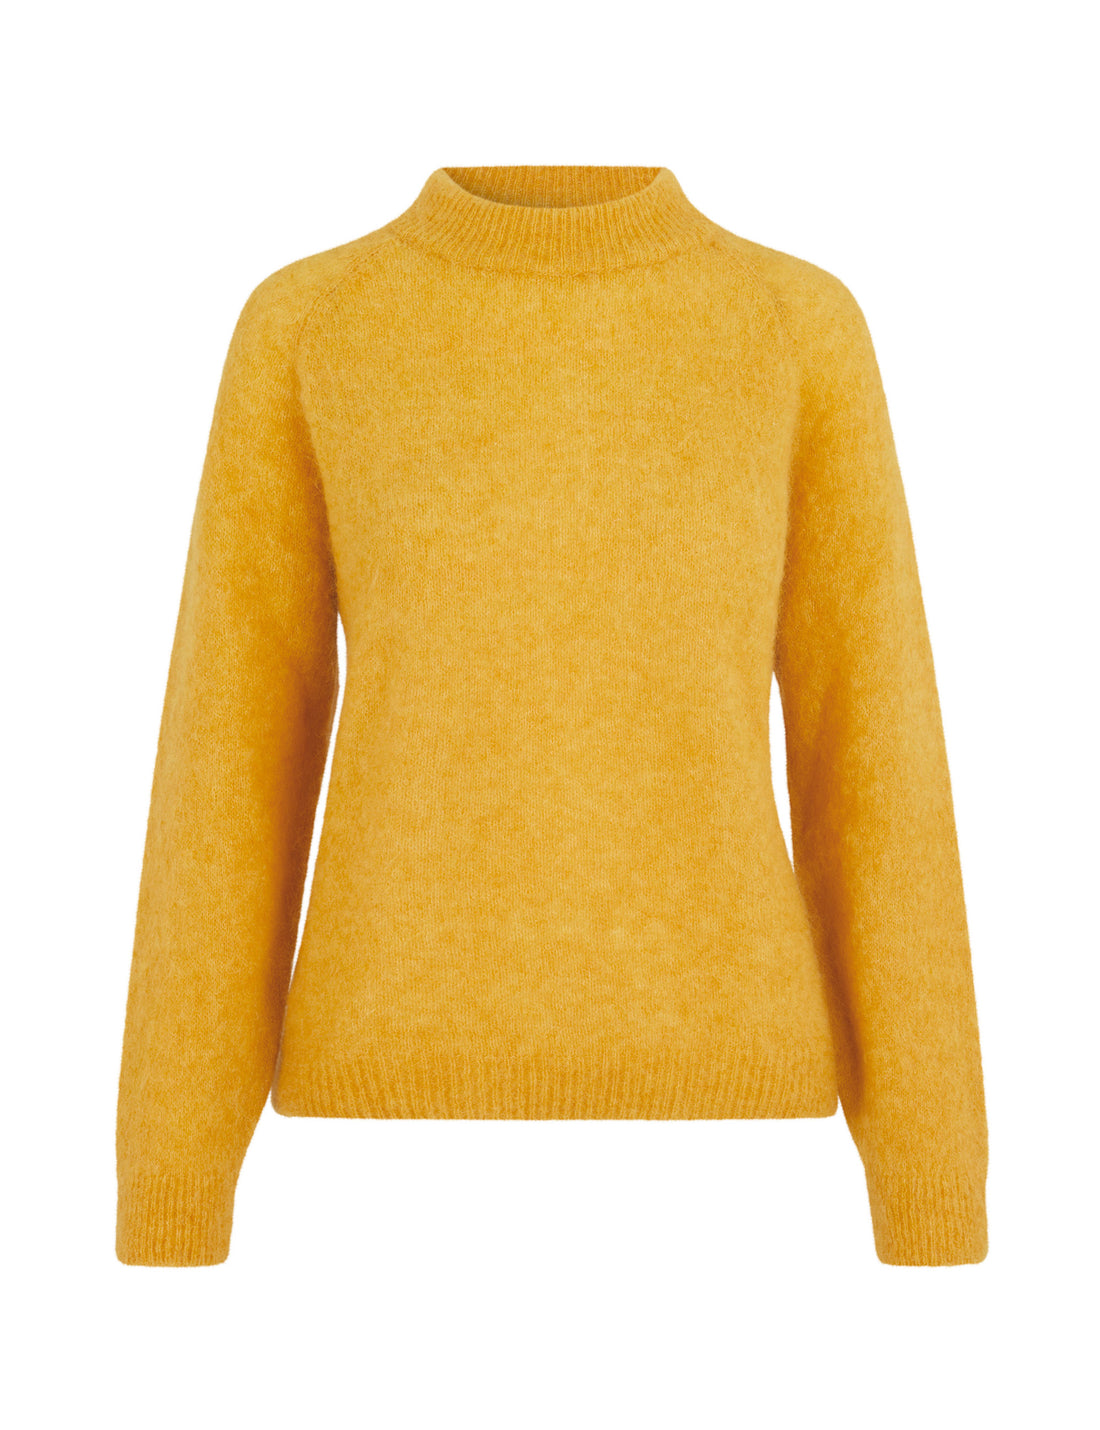 Annabella knit yellow